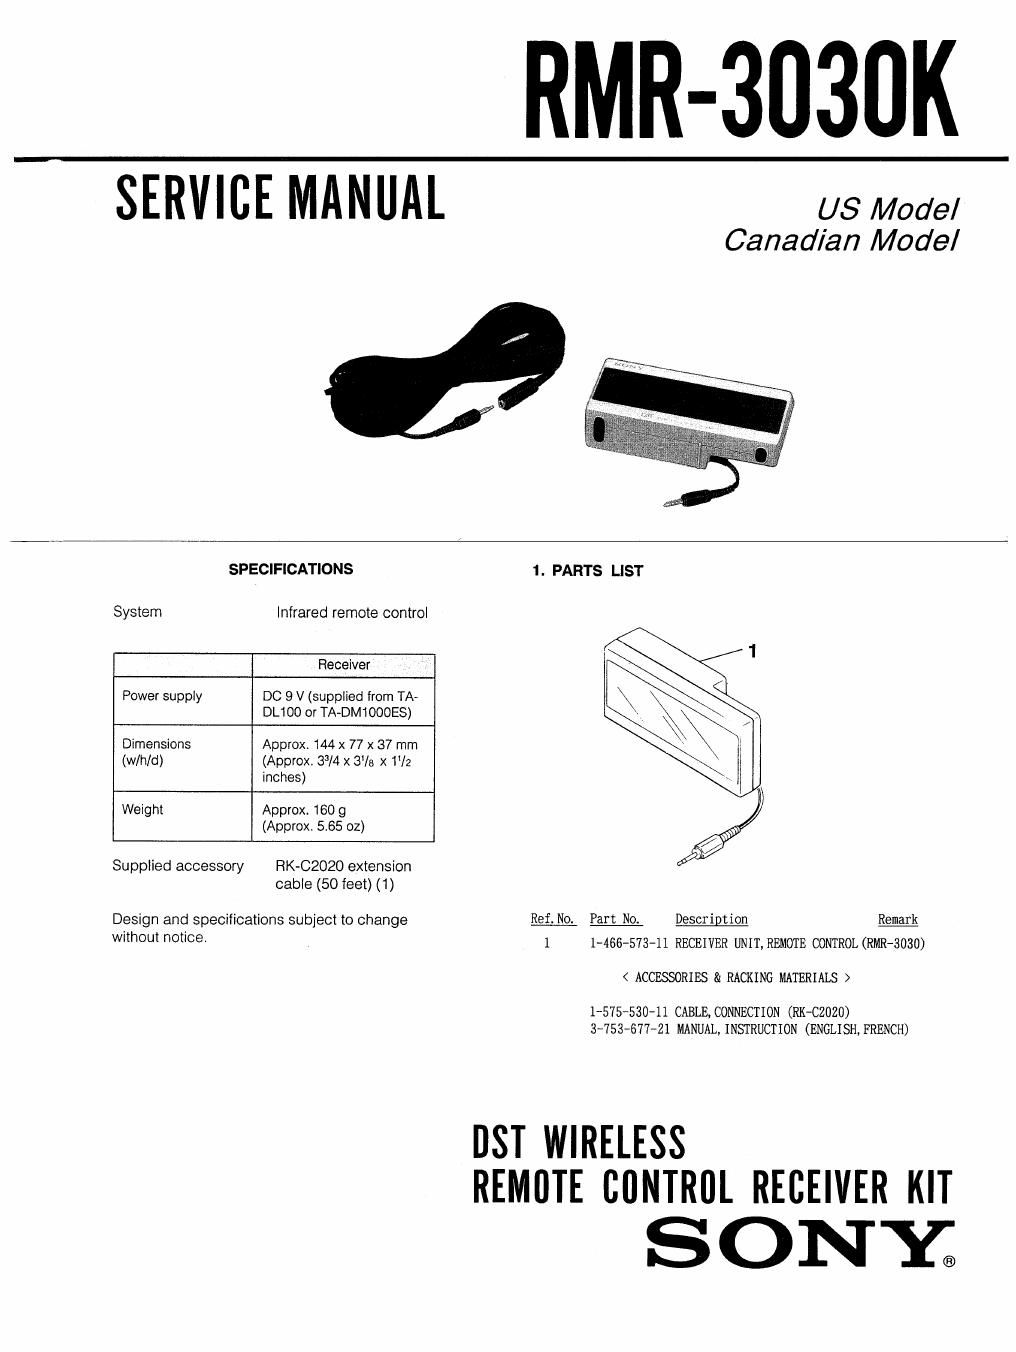 sony rm r 3030 k service manual